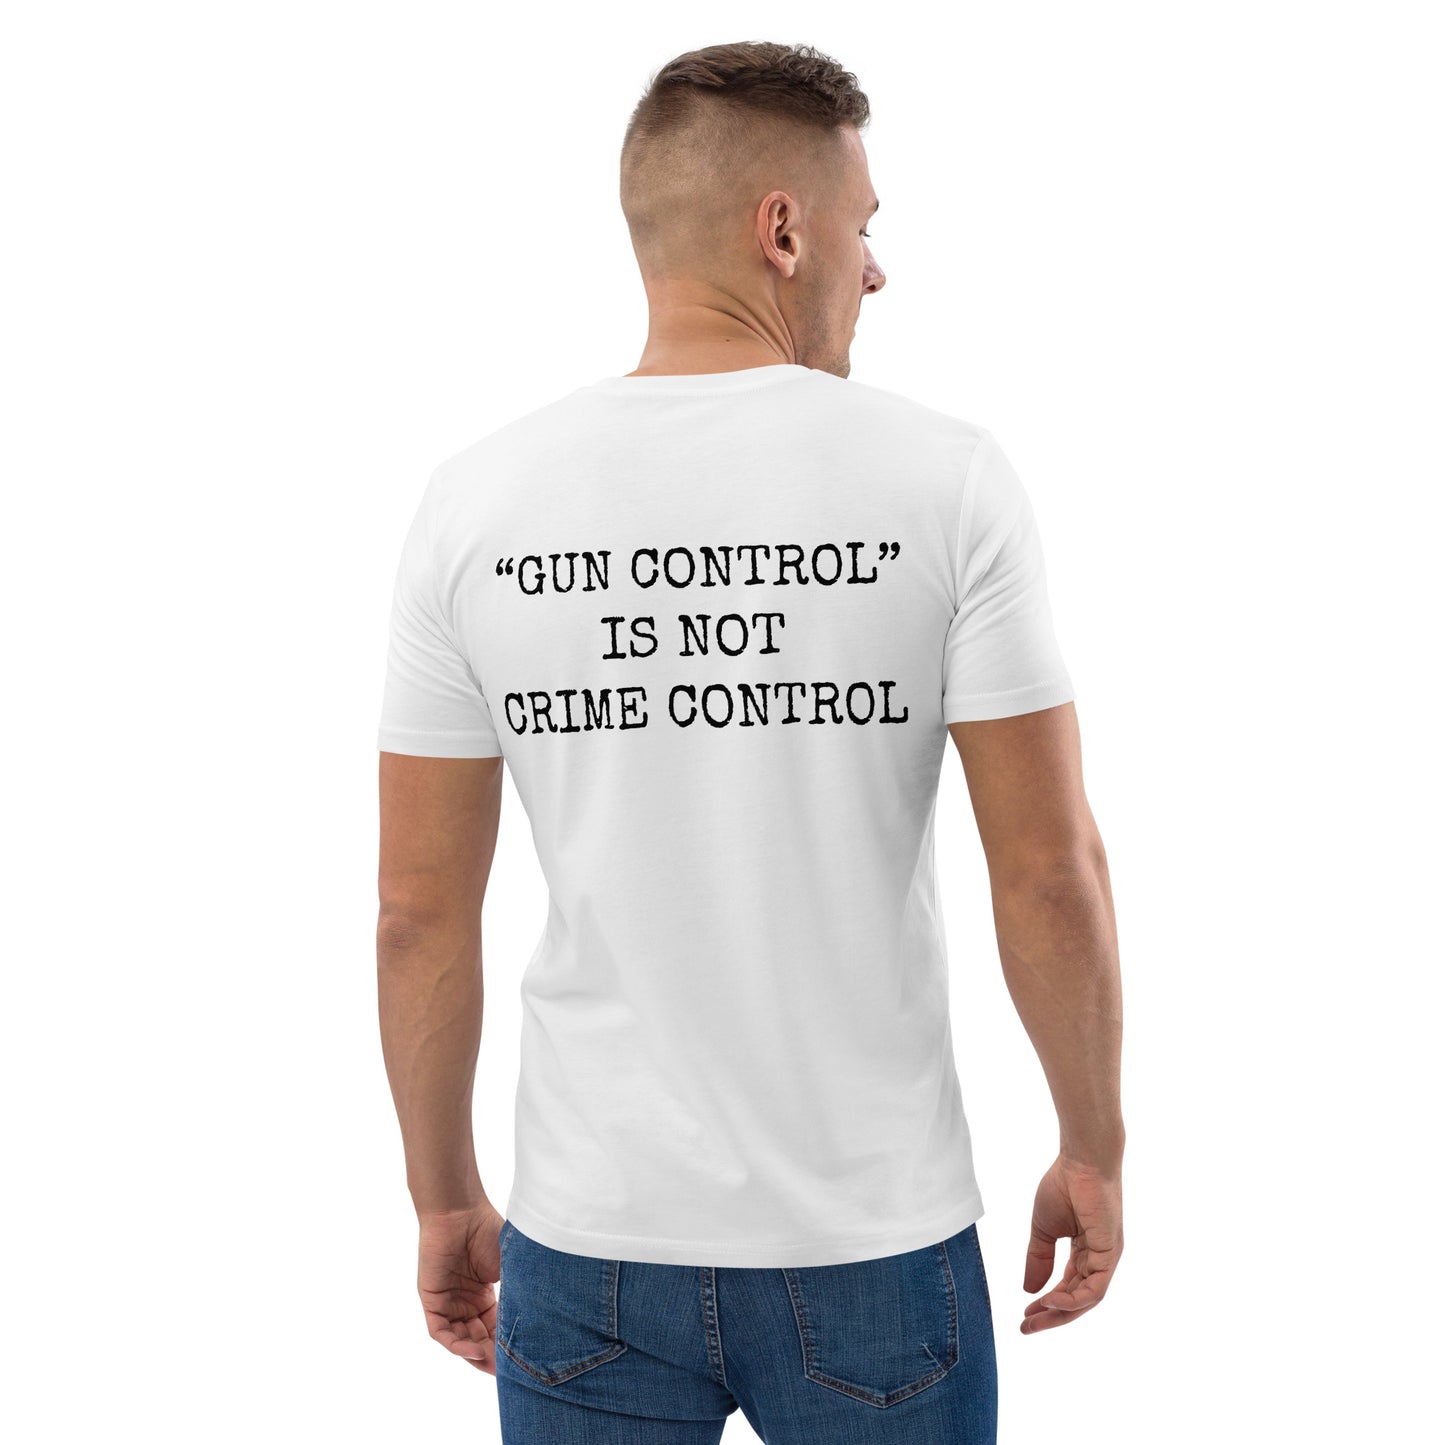 T-shirt - "Gun Control" is Not Crime Control